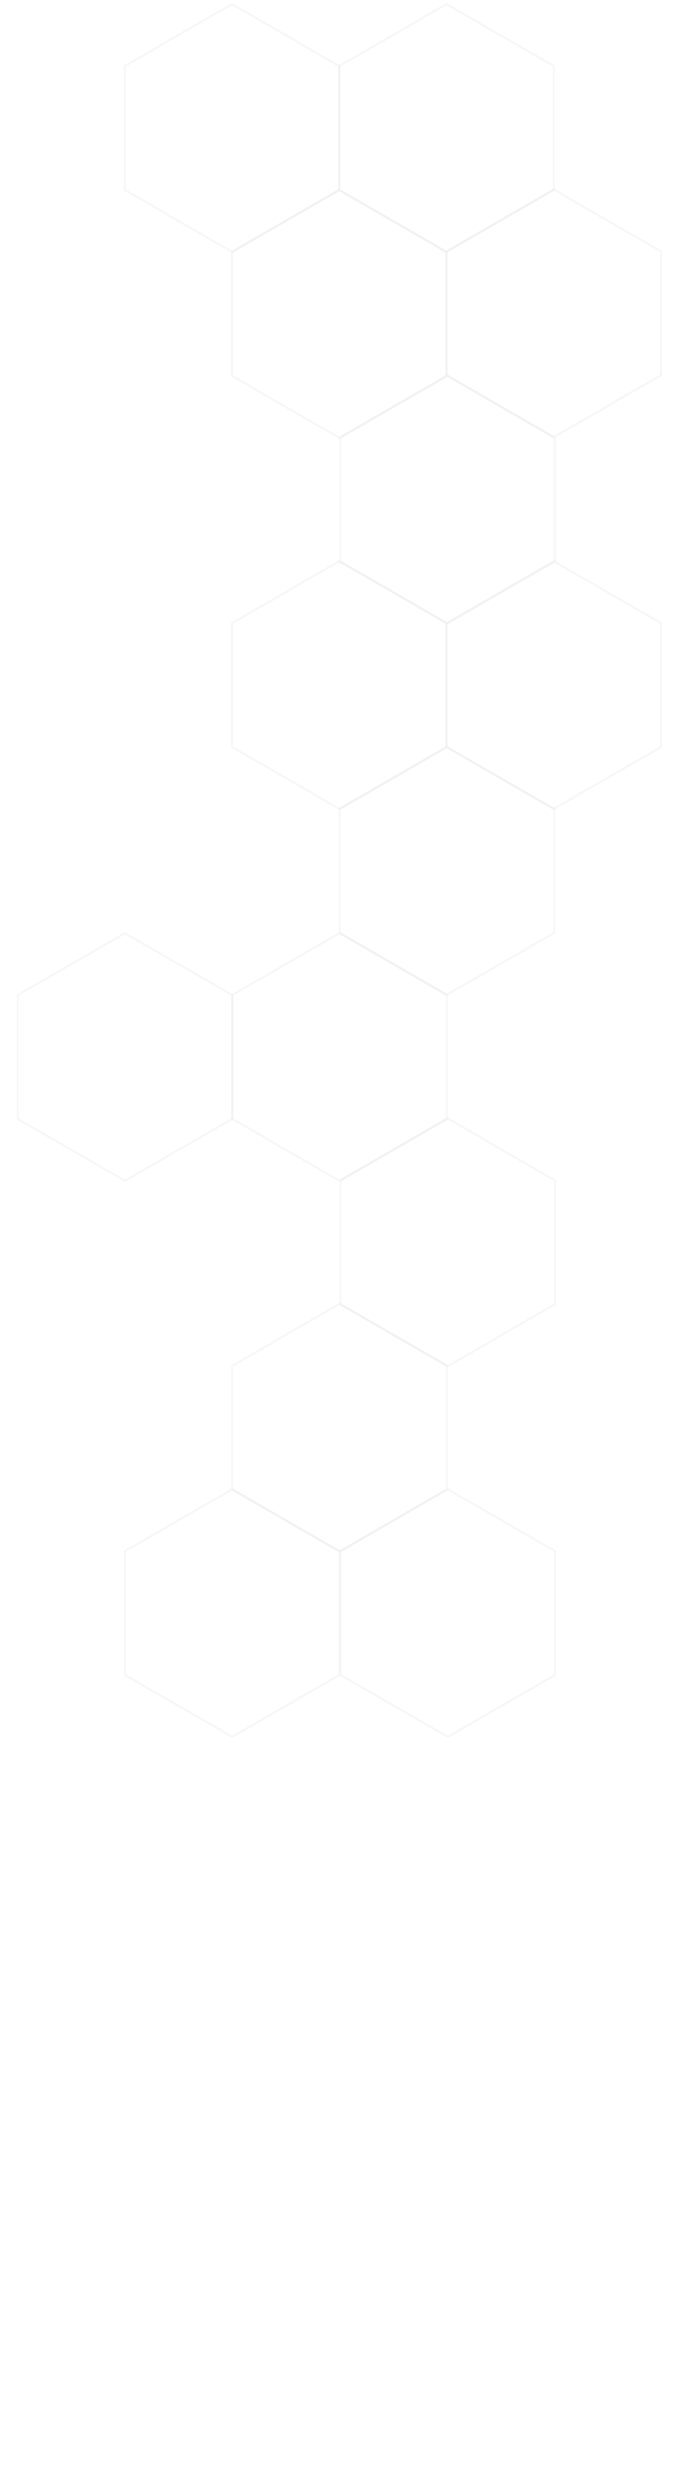 Hexagon BG Image